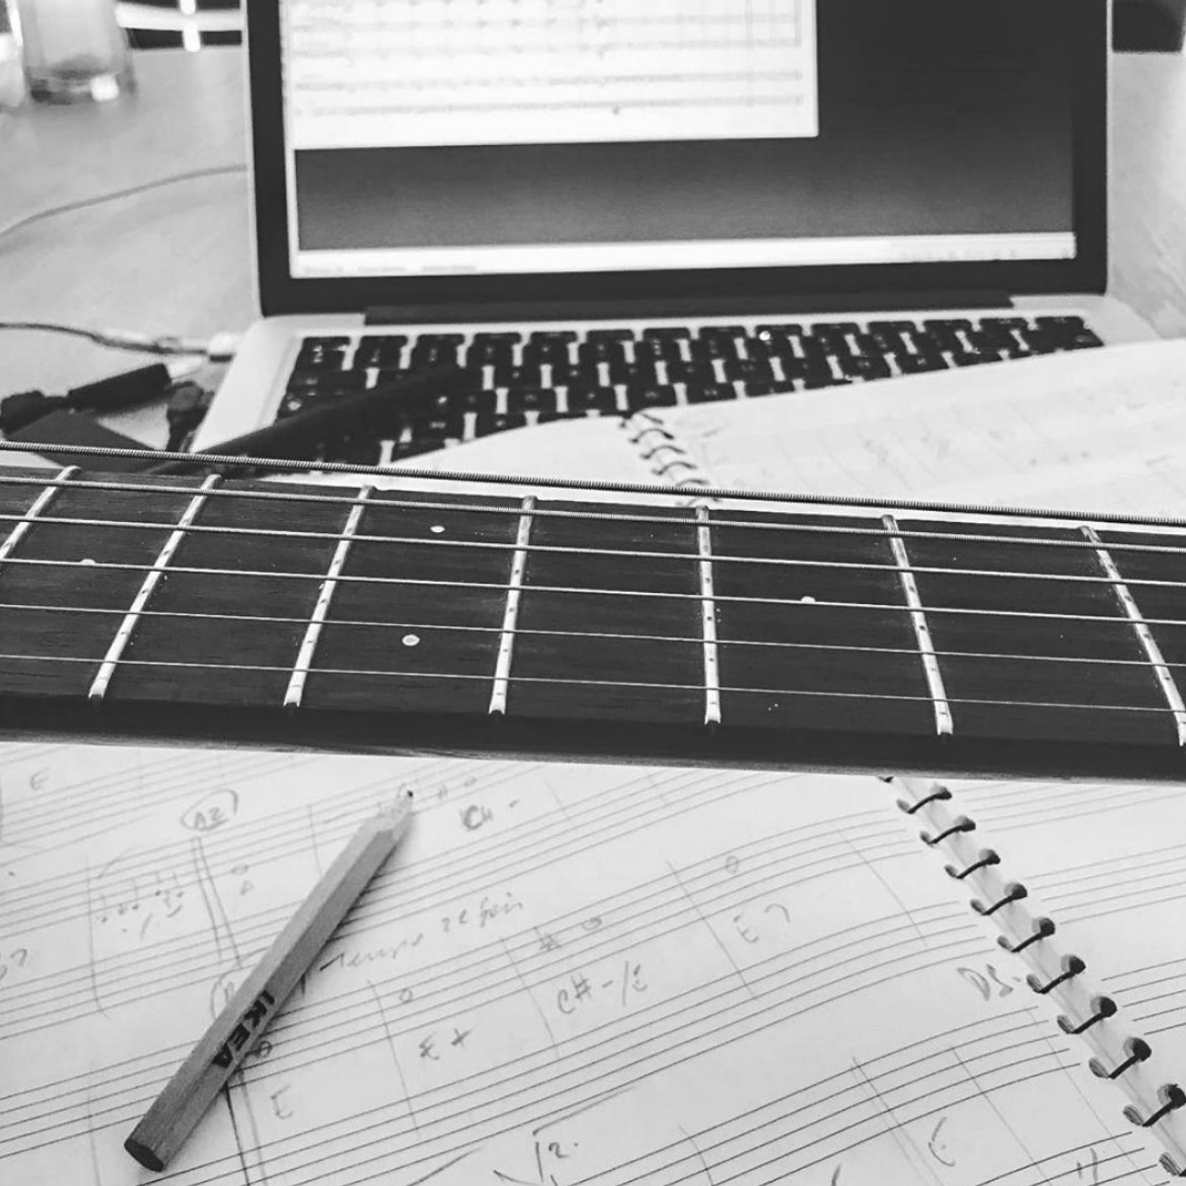 🎼 The Arranger 📷 instagr.am/fredpallem ▶️ avid.com/sibelius #arranger #music #musicnotation #avidsibelius #sheetmusic #composer #sibelius #avid